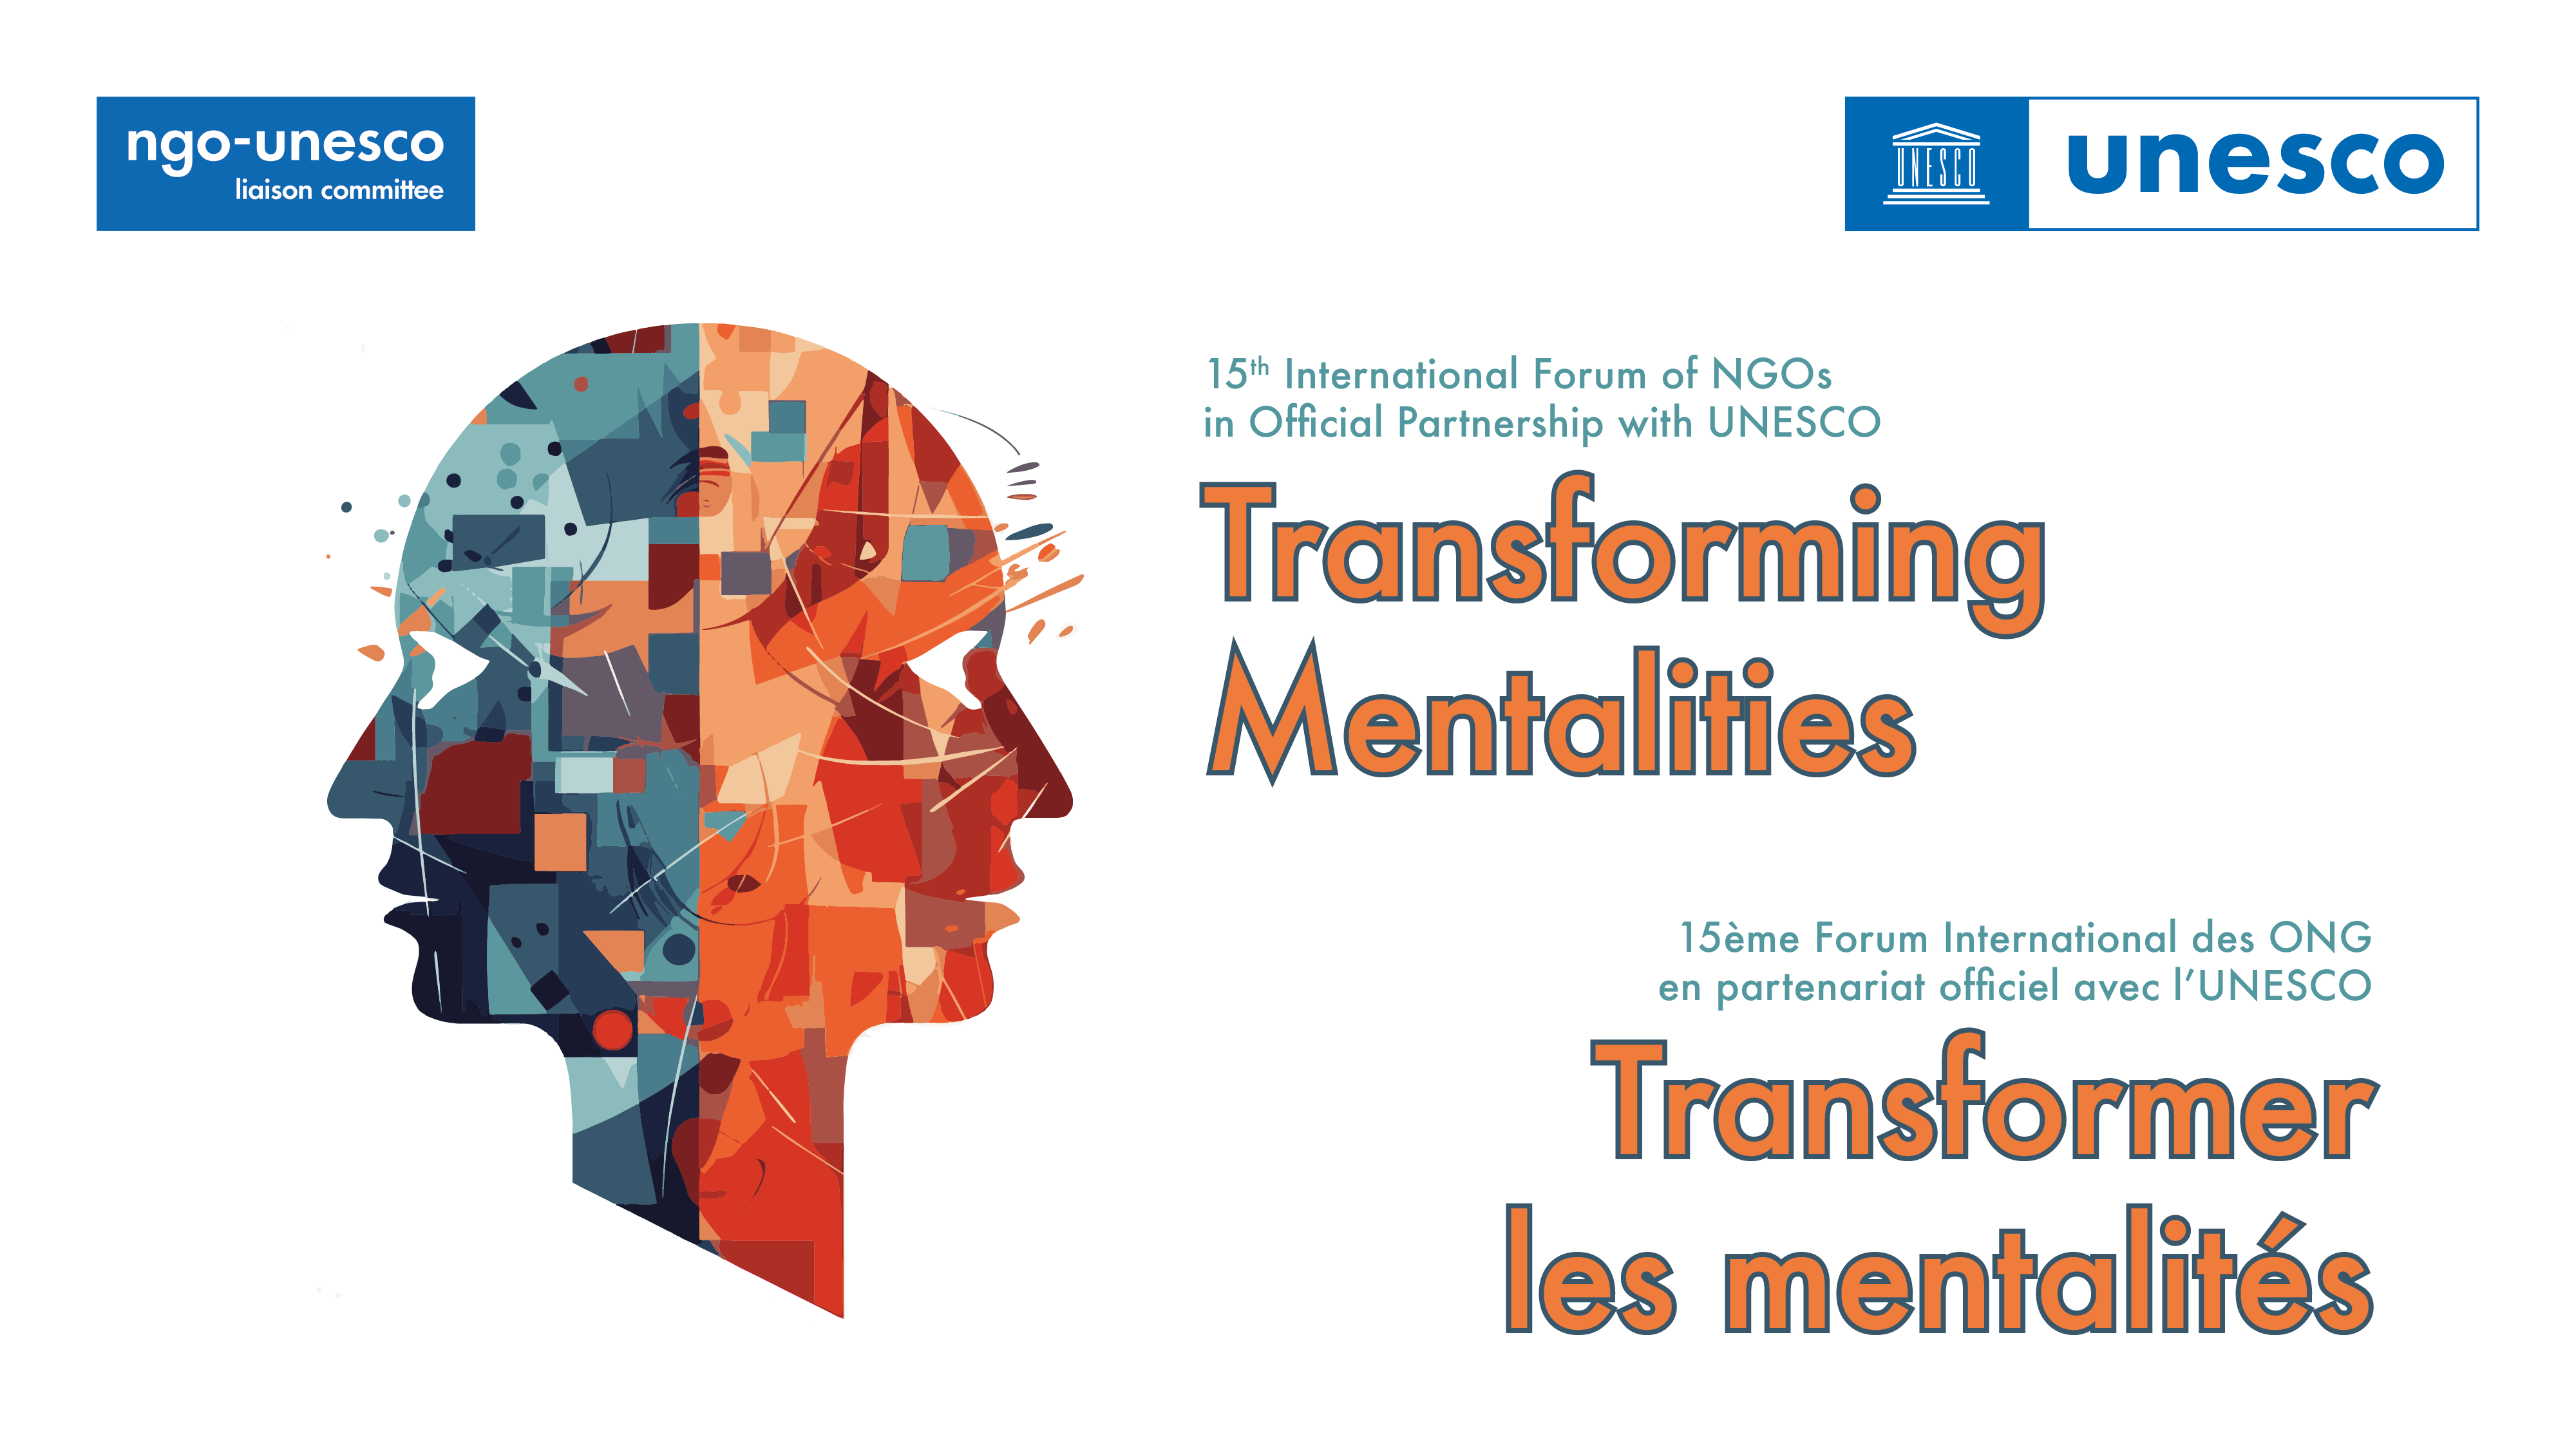 15th International Forum of NGOs on “Transforming Mentalities” / 15e Forum international des ONG sur “Transformer les mentalités"